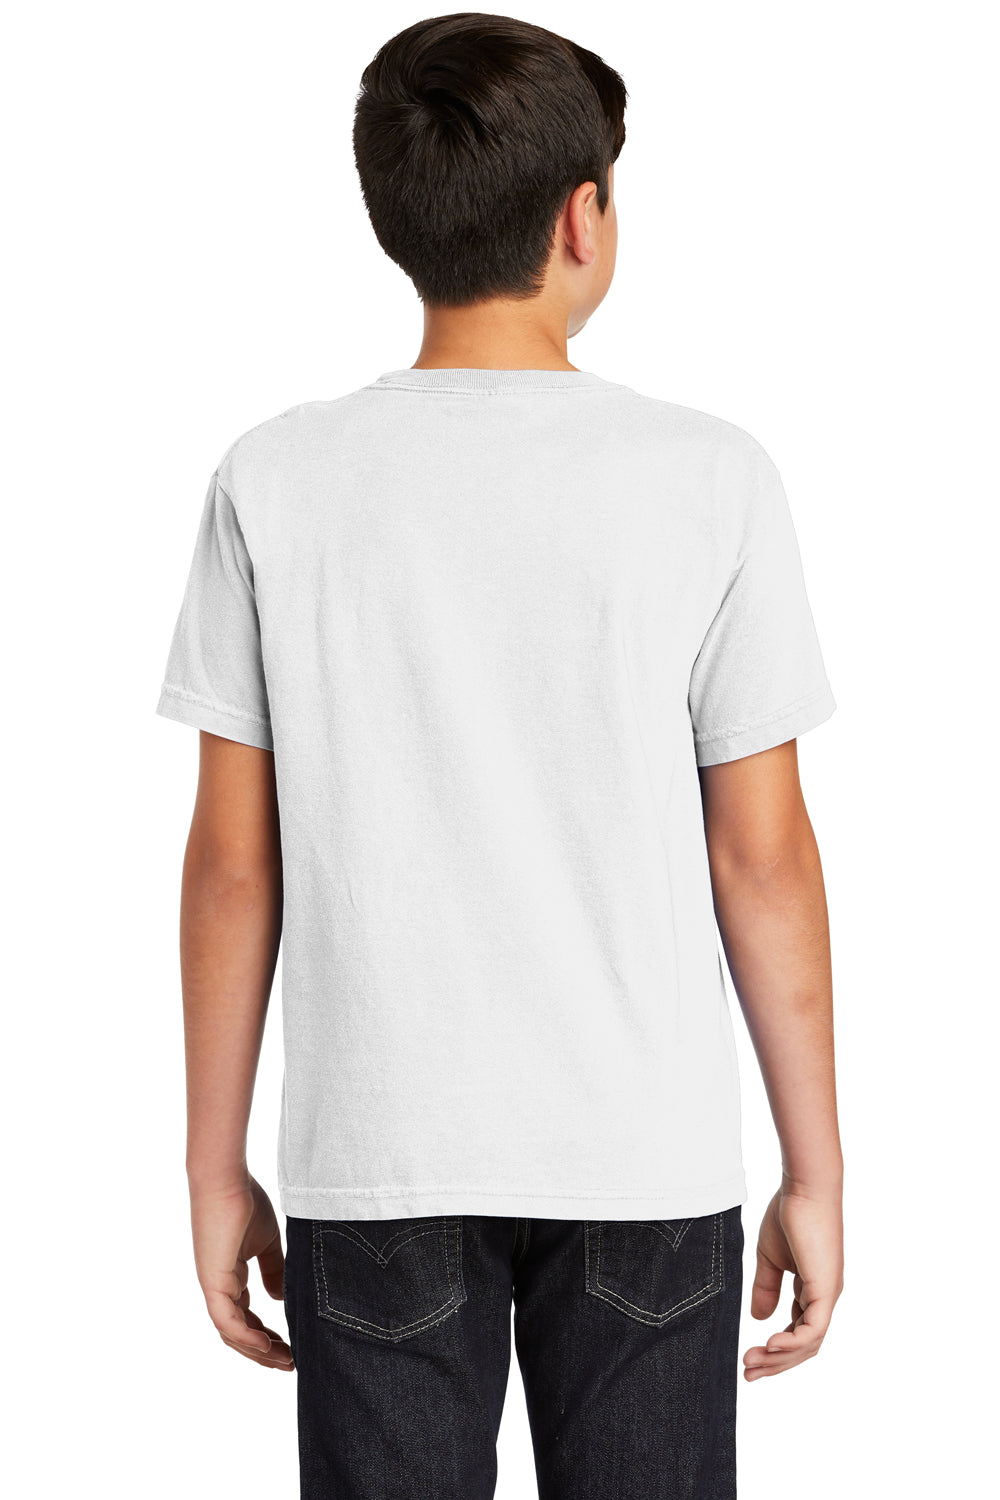 Comfort Colors C9018 Youth Short Sleeve Crewneck T-Shirt White Back